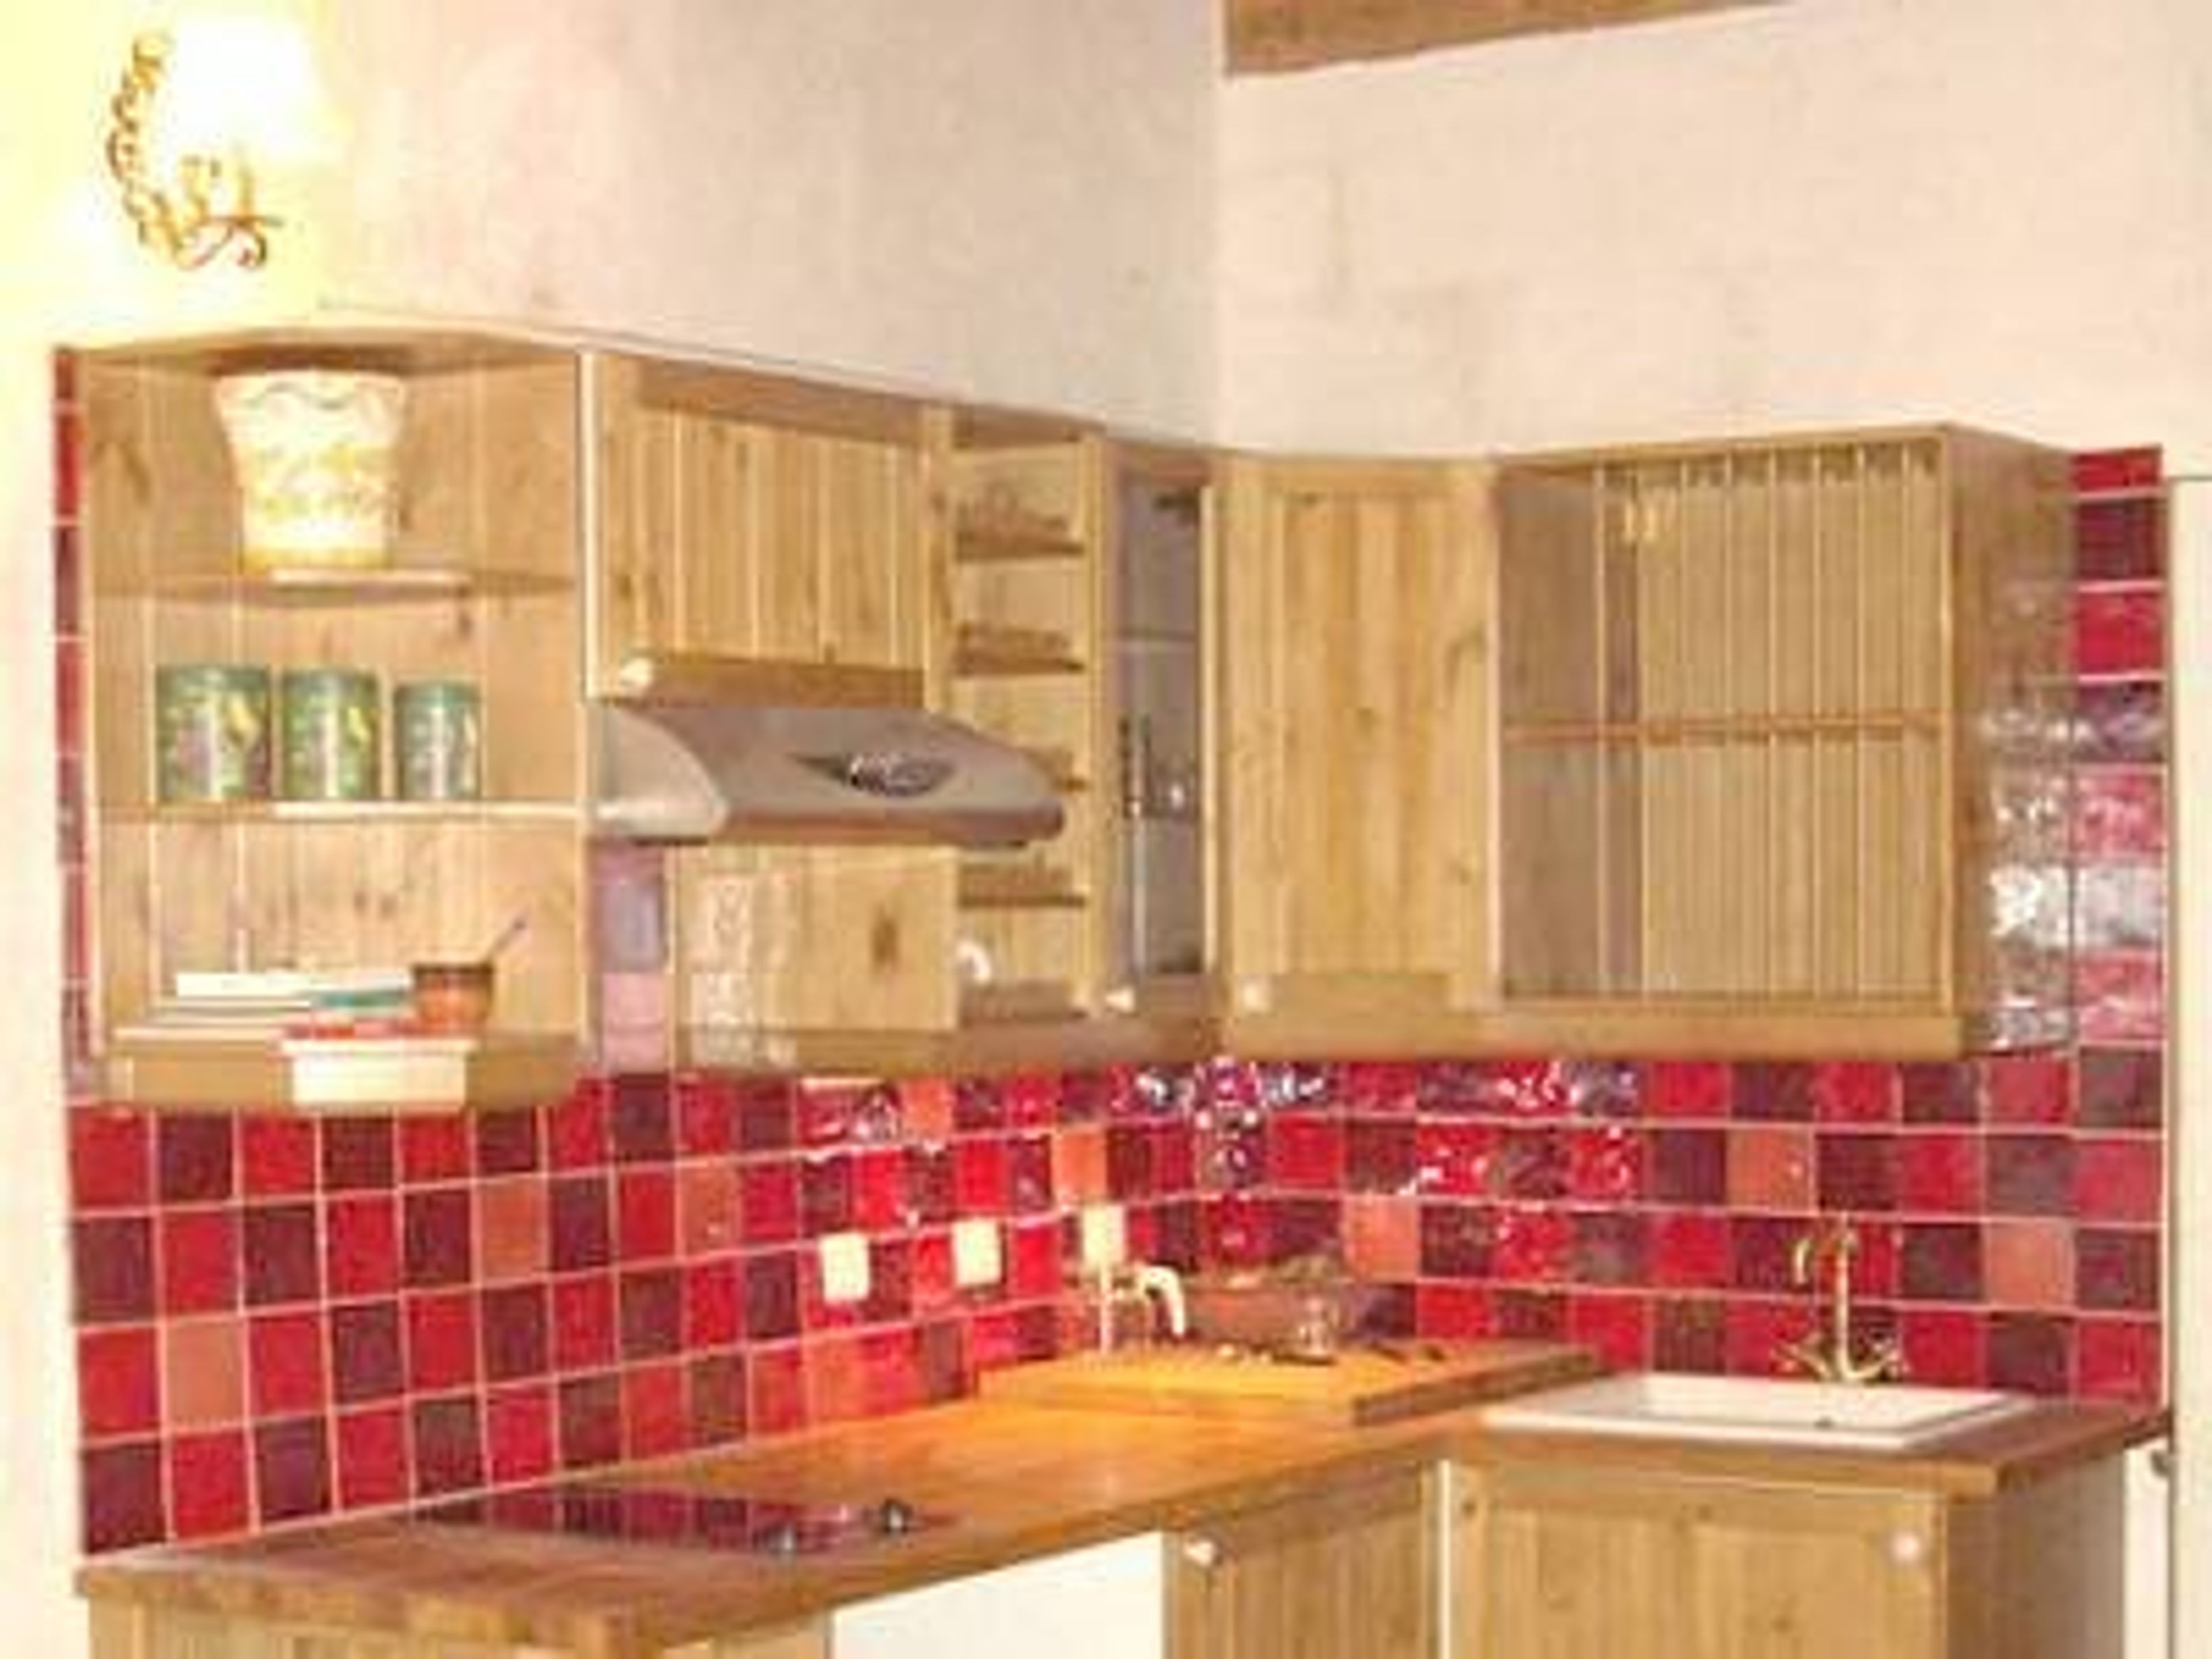 Detail of kitchen area